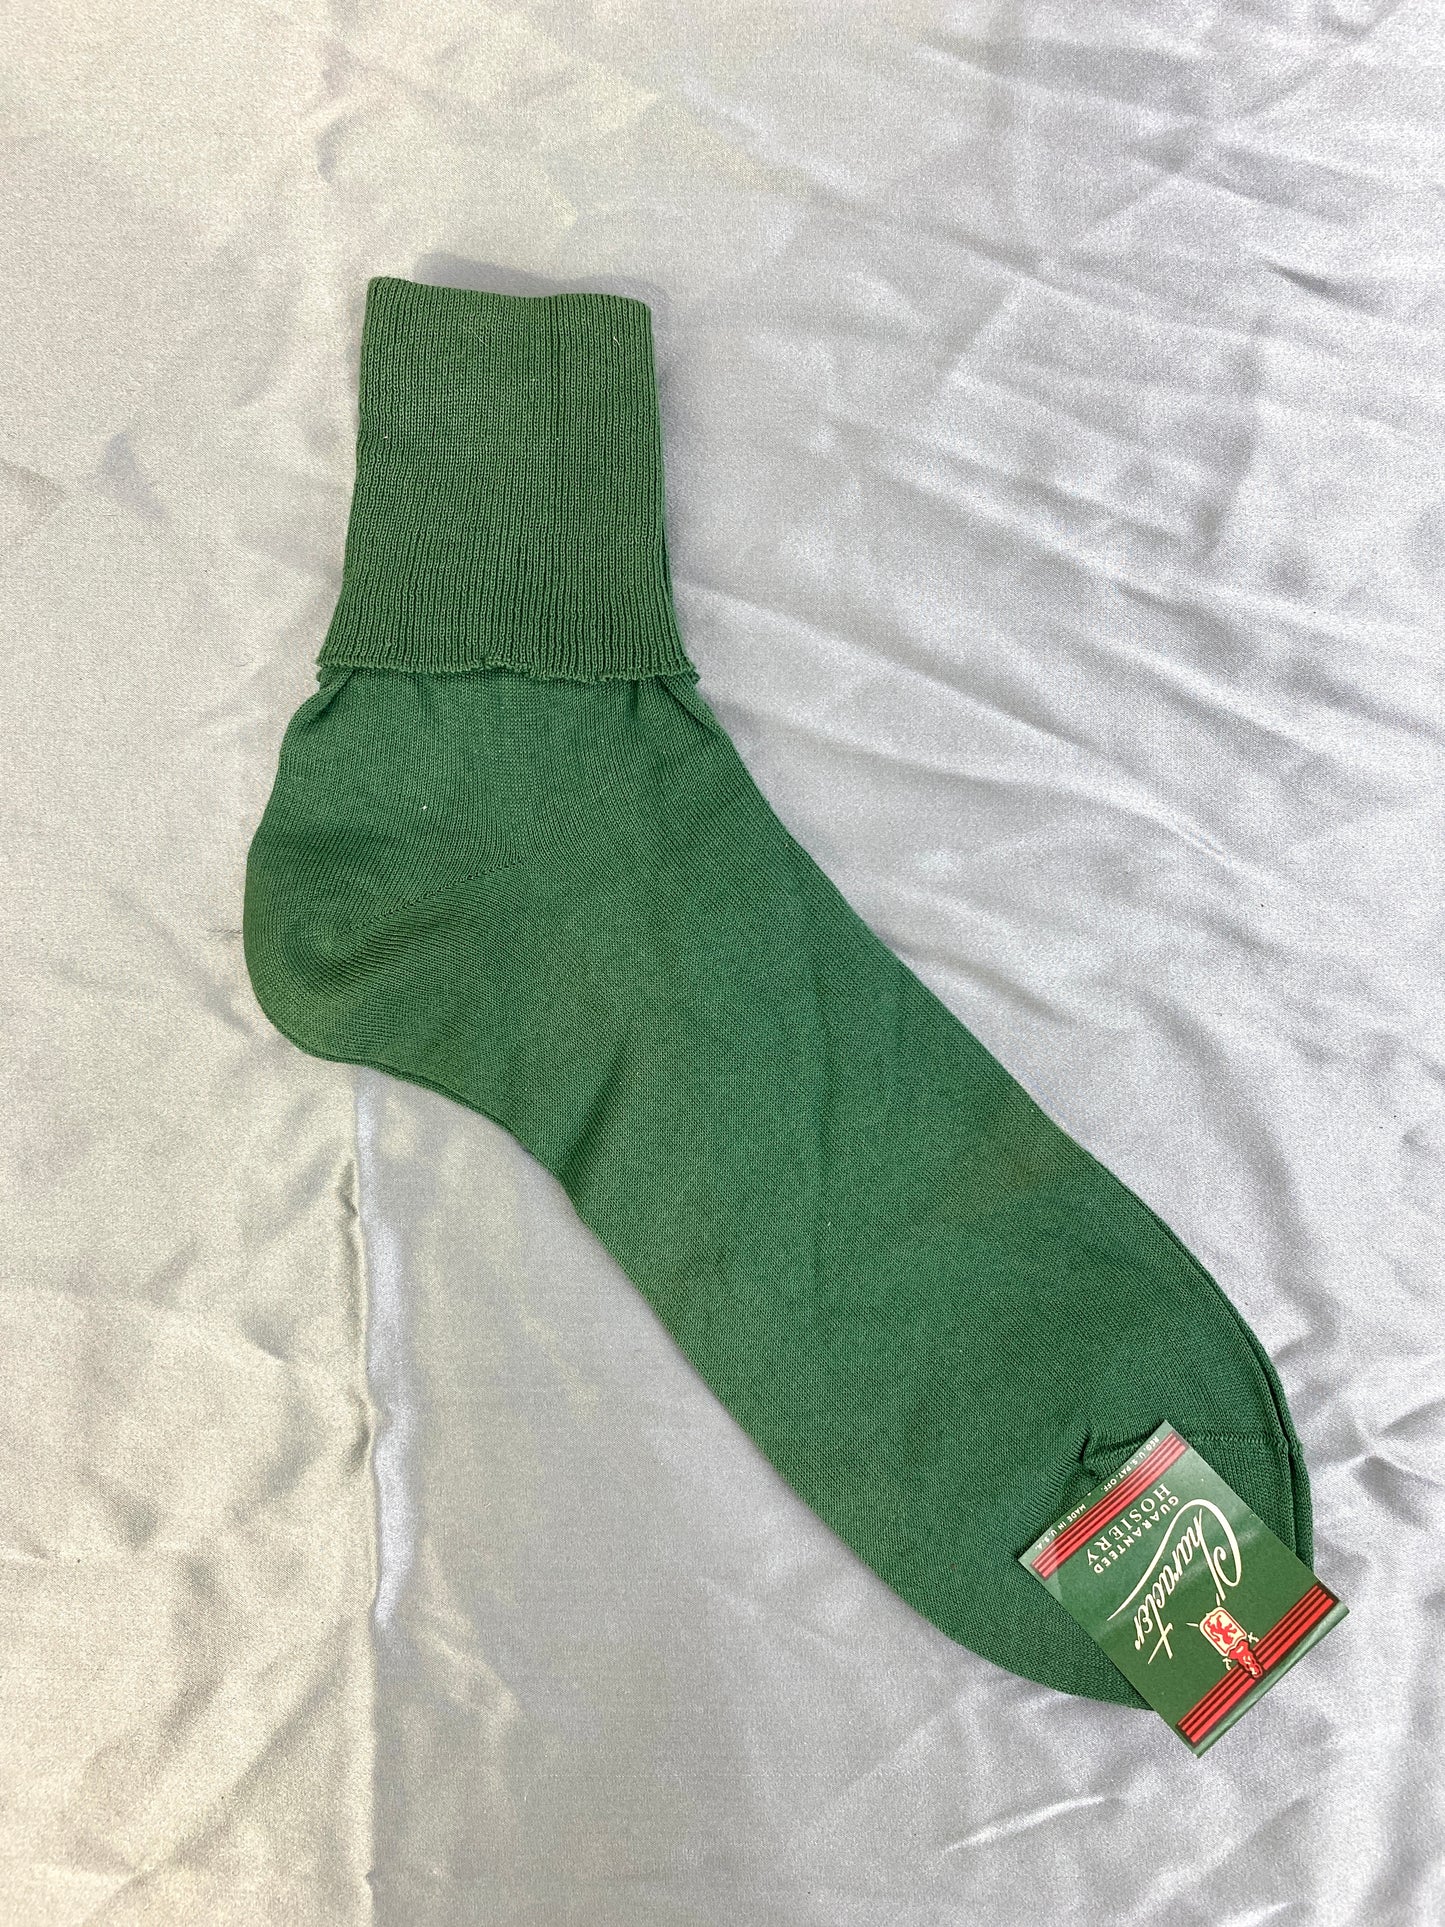 Vintage 1950s Deadstock Green Cotton Cuffed Anklet Socks, Character Hosiery